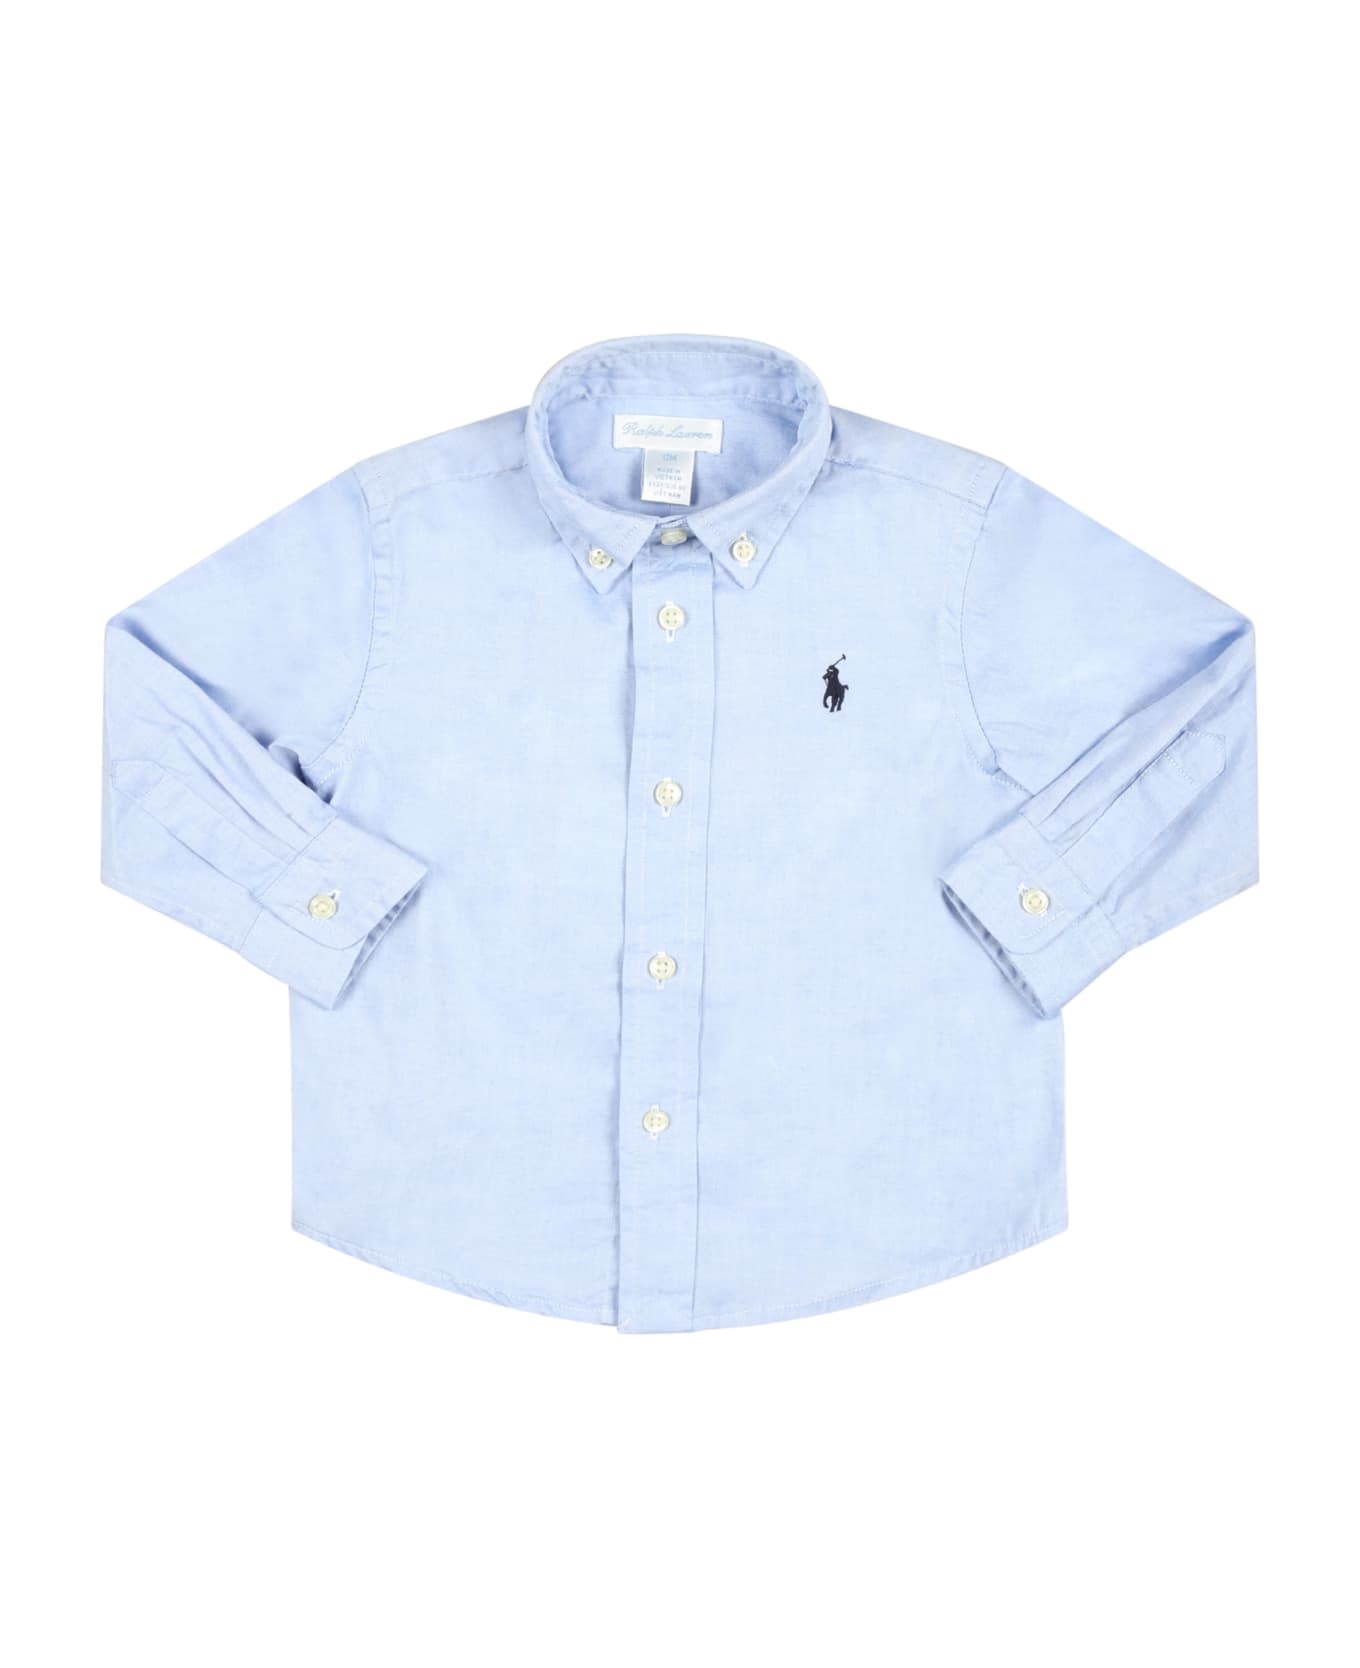 Ralph Lauren Light Blue Shirt For Baby Boy With Pony Logo - Light Blue